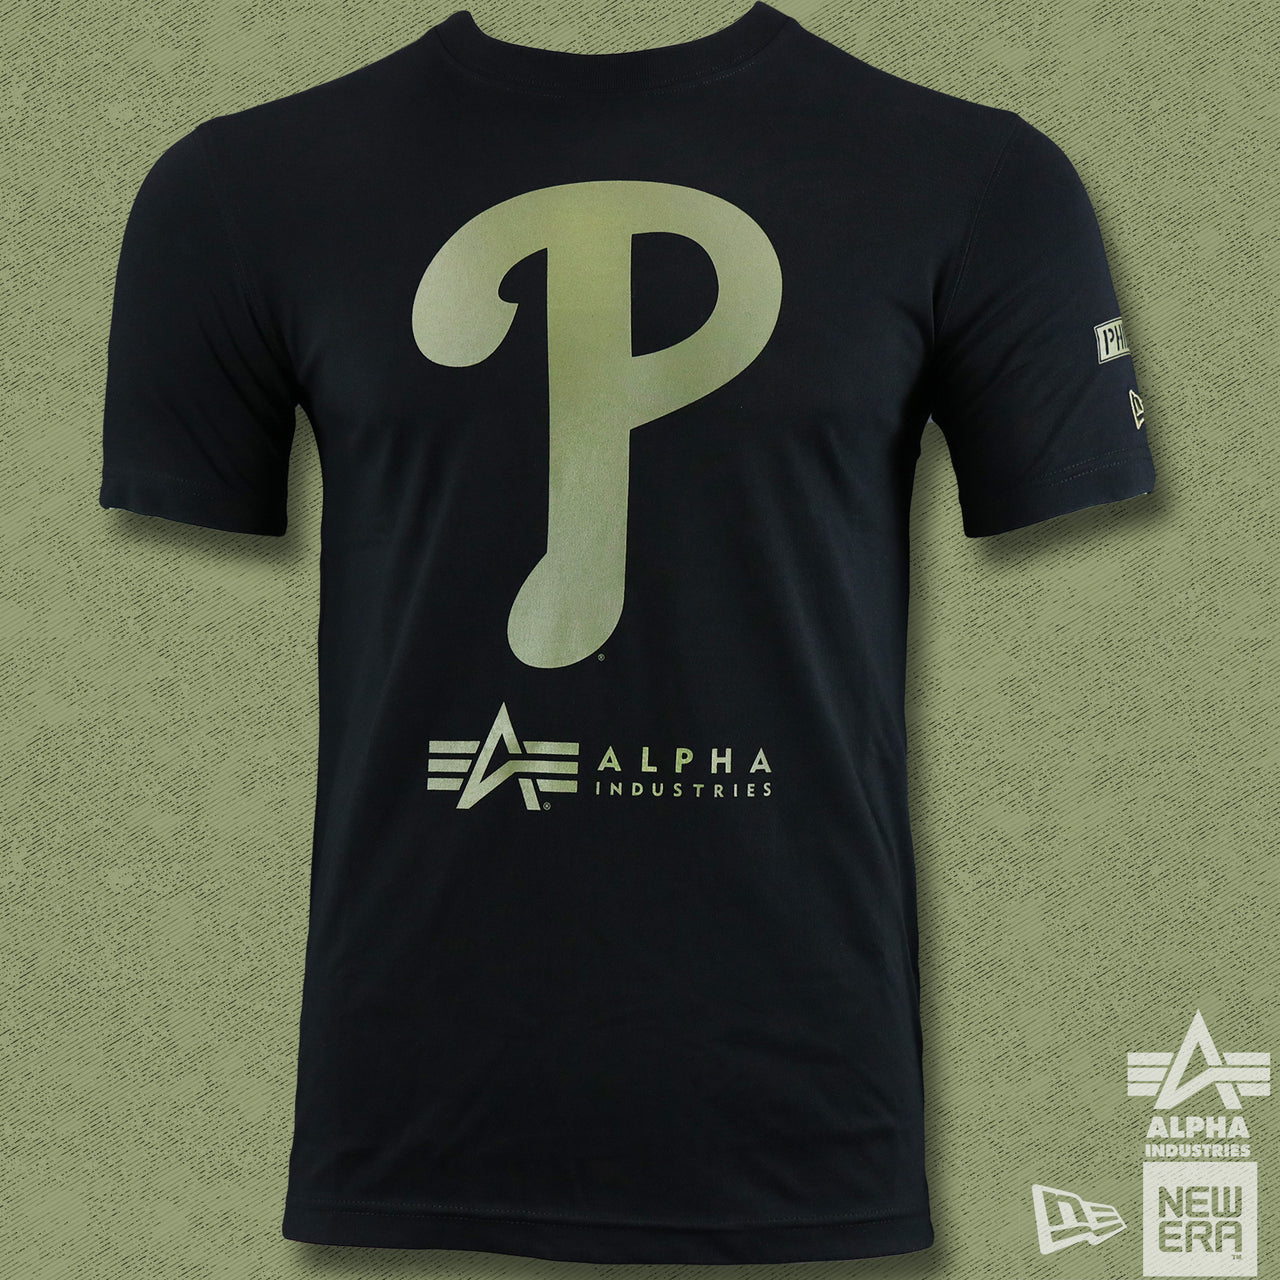 The Philadelphia Phillies Sports Unite Us Alpha Industries Armed Forces T-Shirt | Black Tshirt